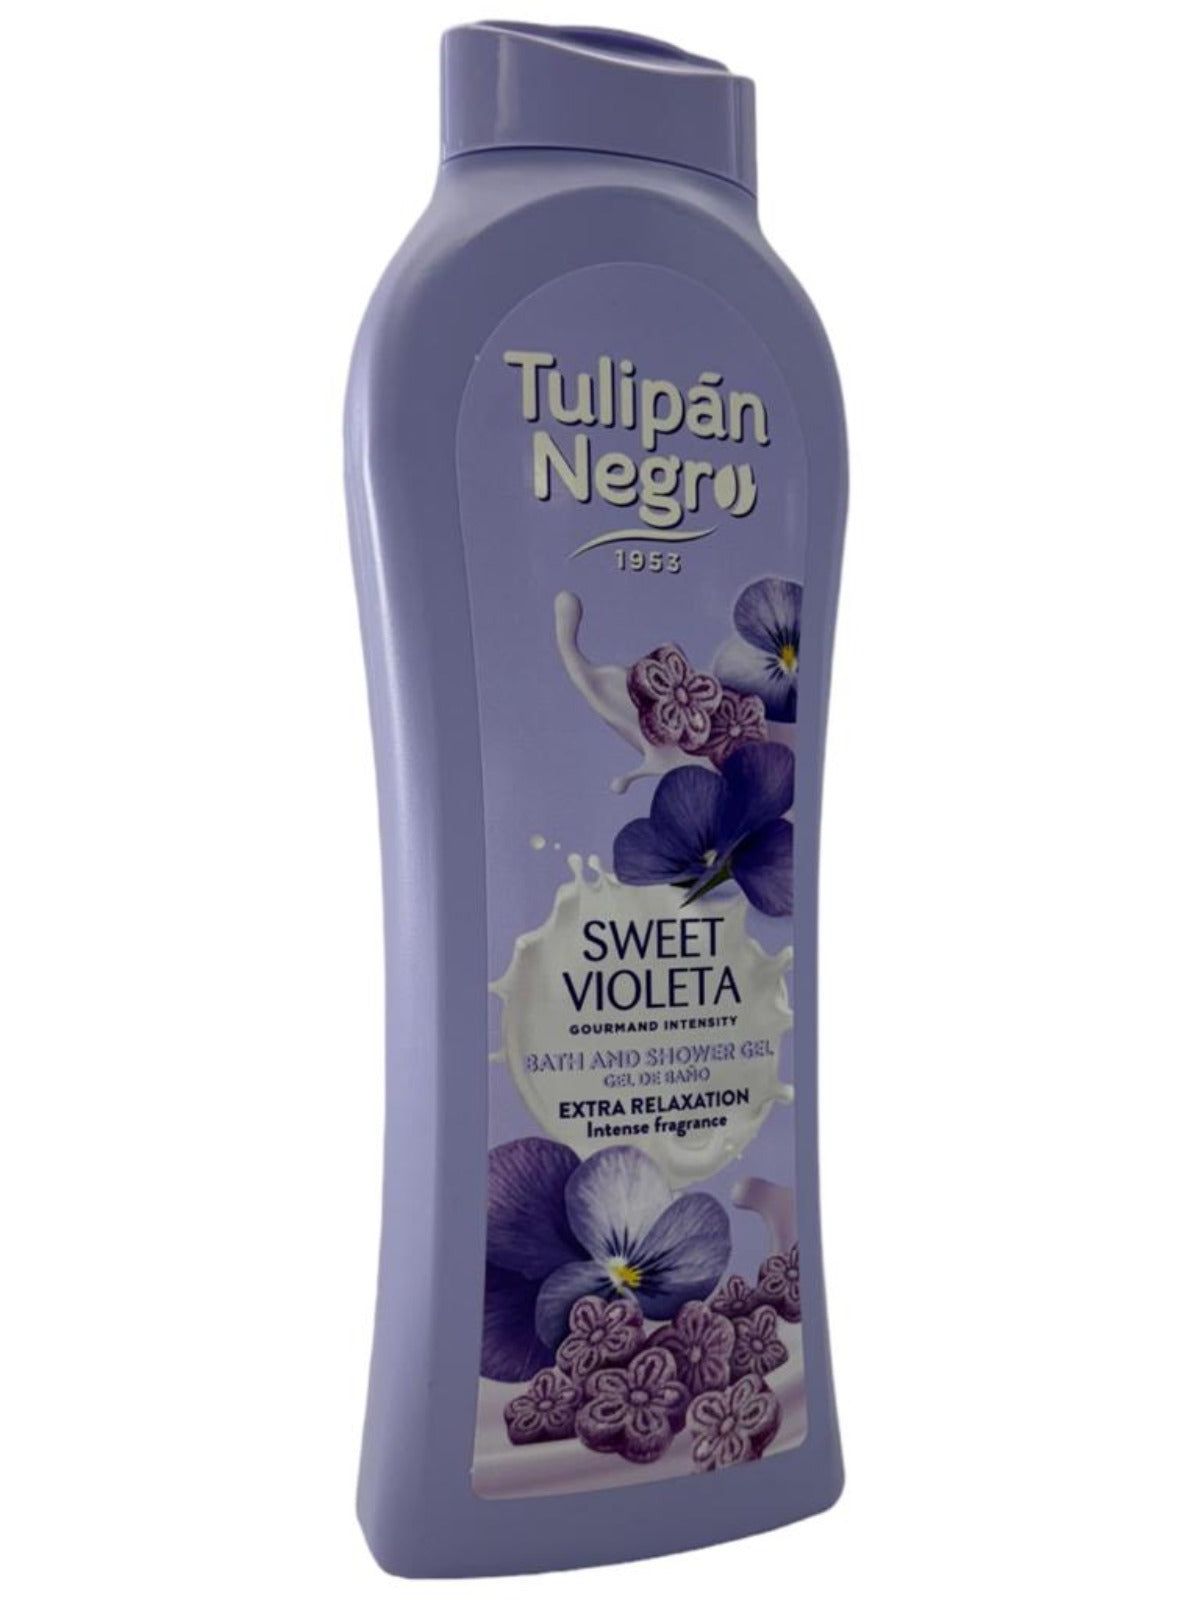 Tulipan Negro Sweet Violeta Bath And Shower Gel 650ml